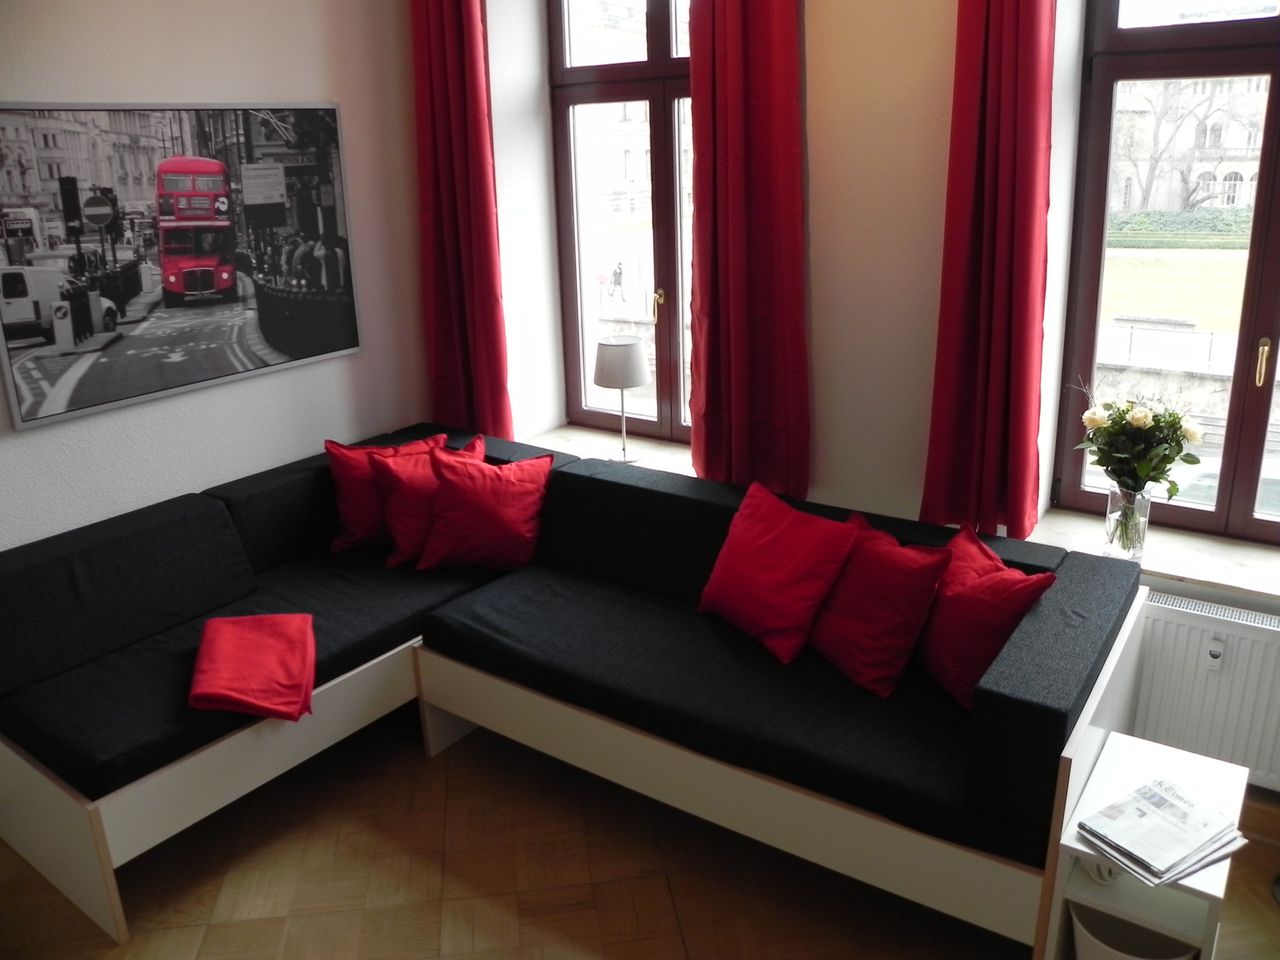 Apartment "Am Roßplatz", centrally located, 3 rooms, kitchen, shower bath, guest toilet